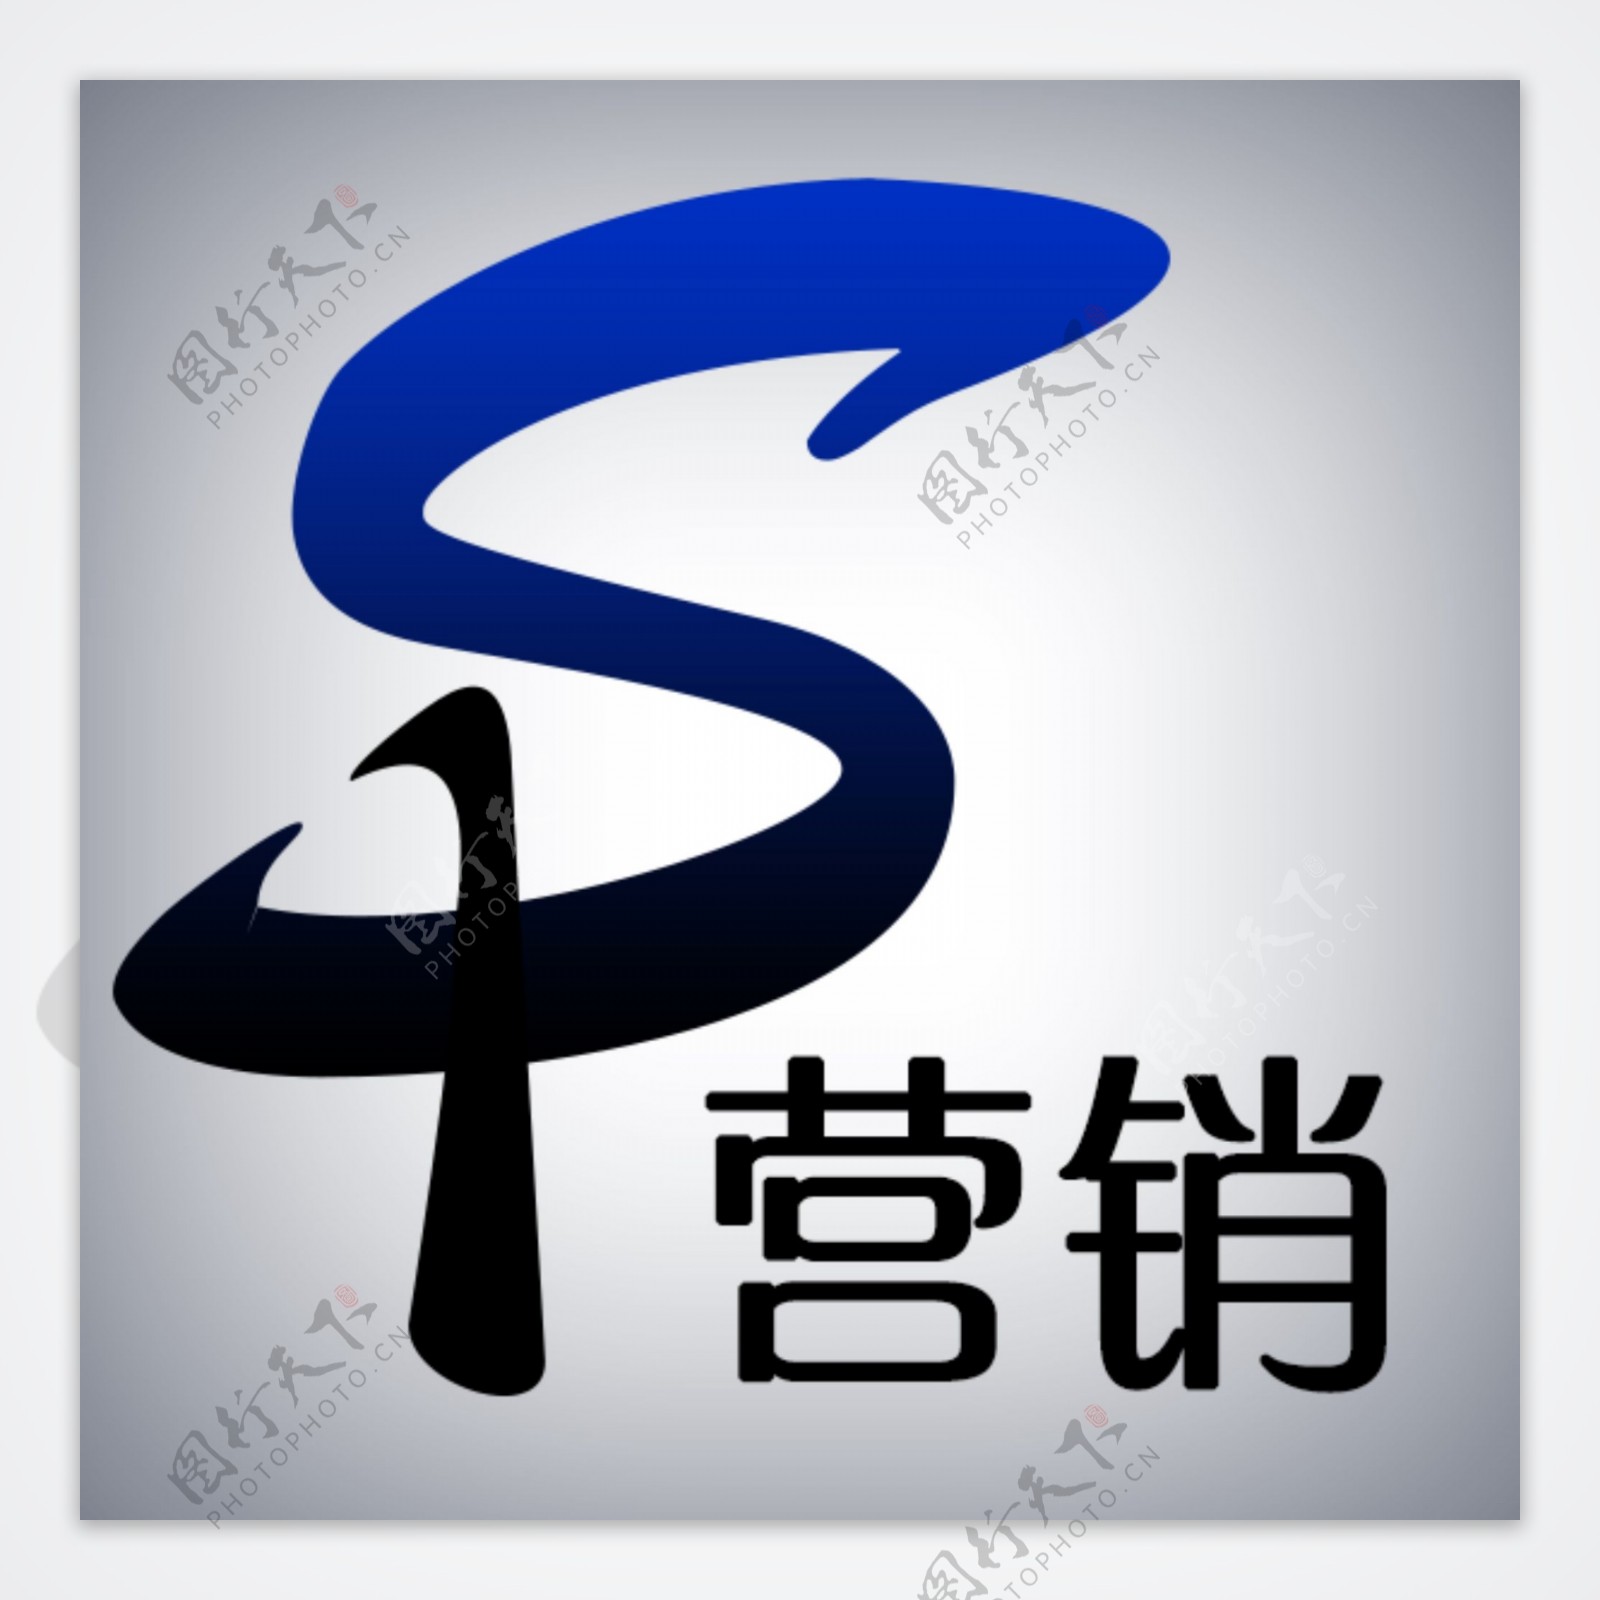 SP美的营销门户logo